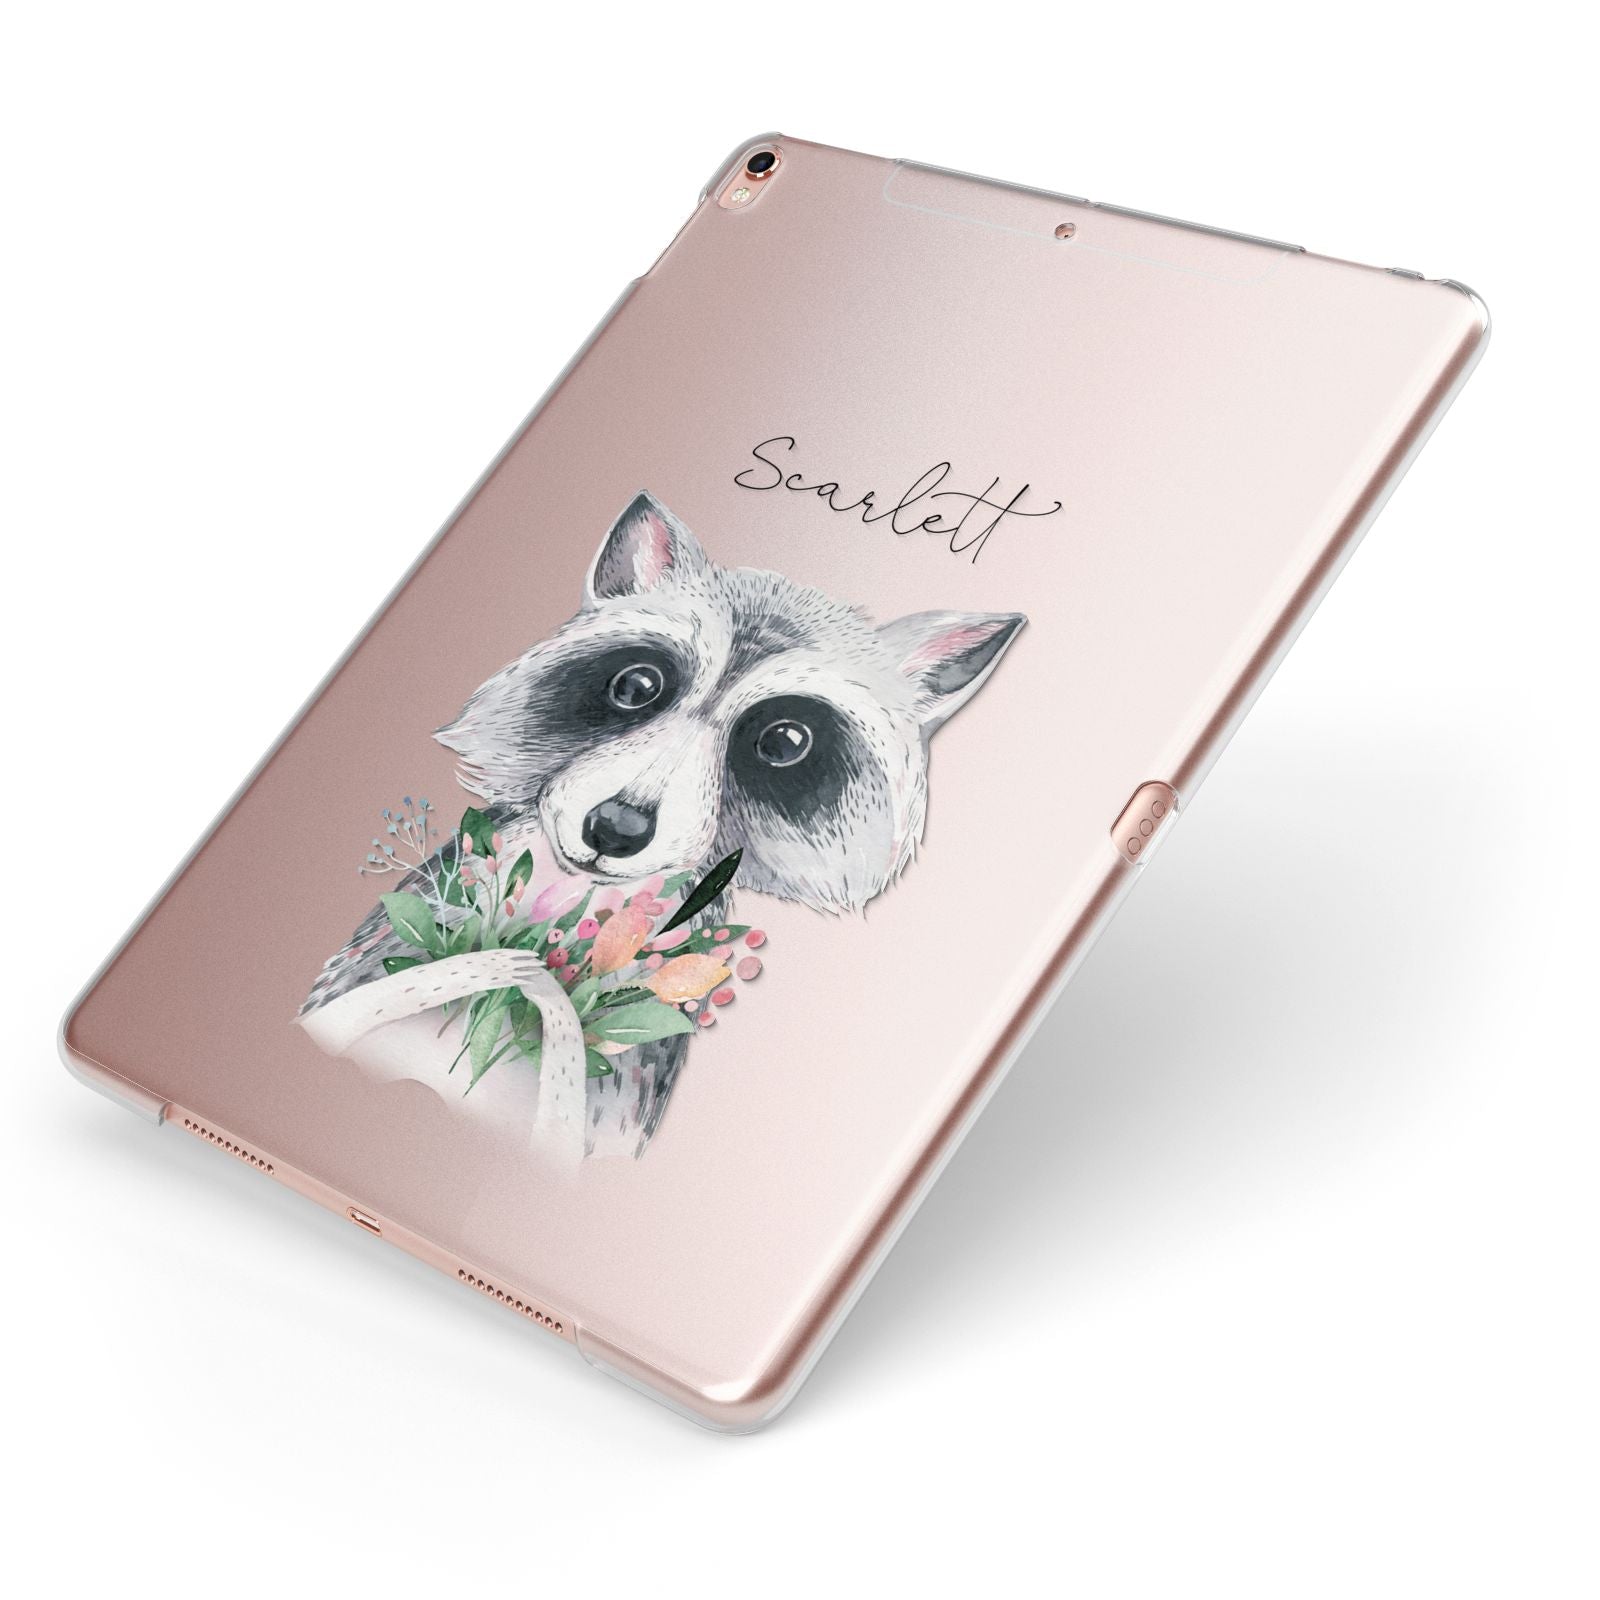 Personalised Raccoon Apple iPad Case on Rose Gold iPad Side View